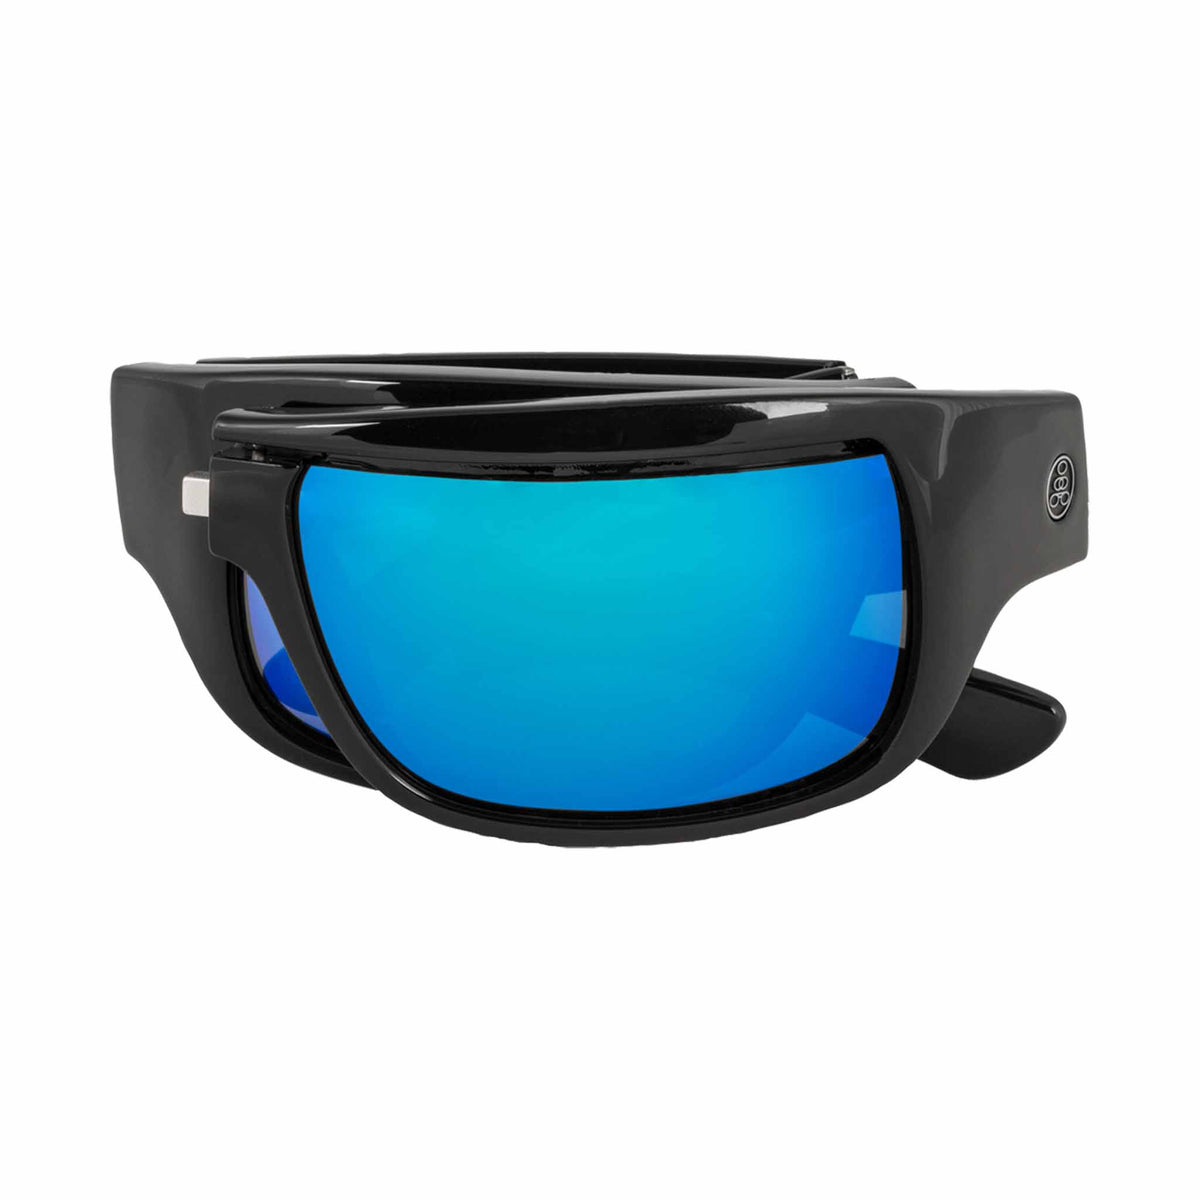 Popticals, Premium Compact Sunglasses, PopH2O, 010070-BGUN, Polarized Sunglasses, Gloss Black Frame, Gray Lenses w/Blue Mirror Finish, Compact View